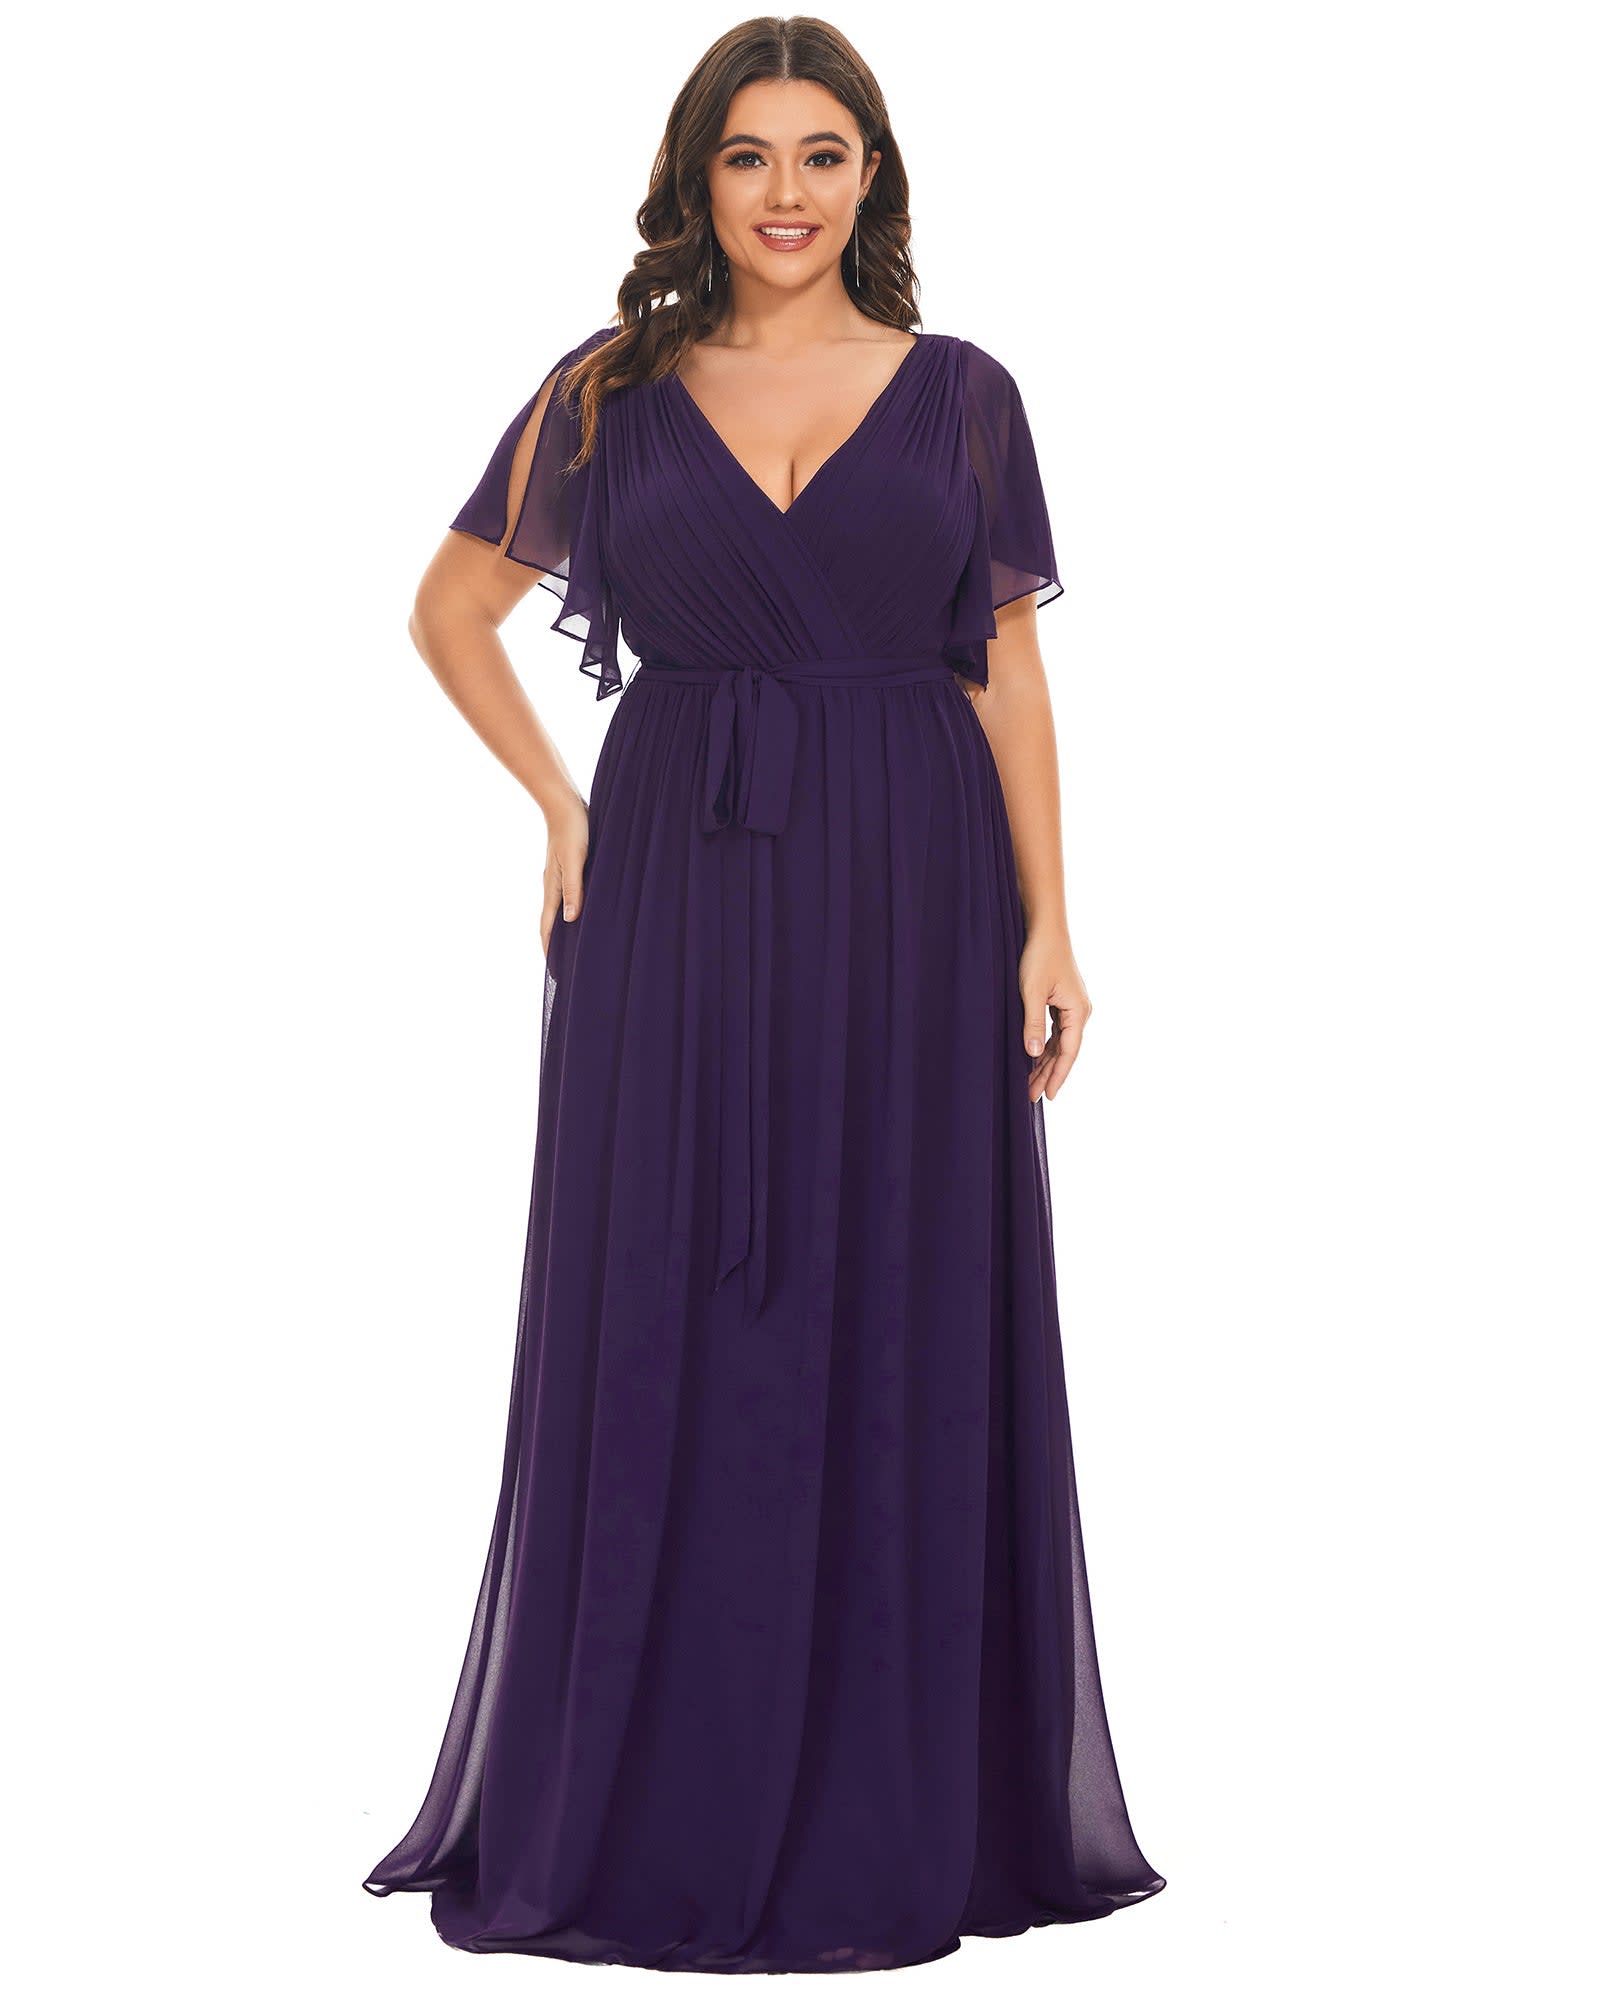 Dark Purple Evening Dresses